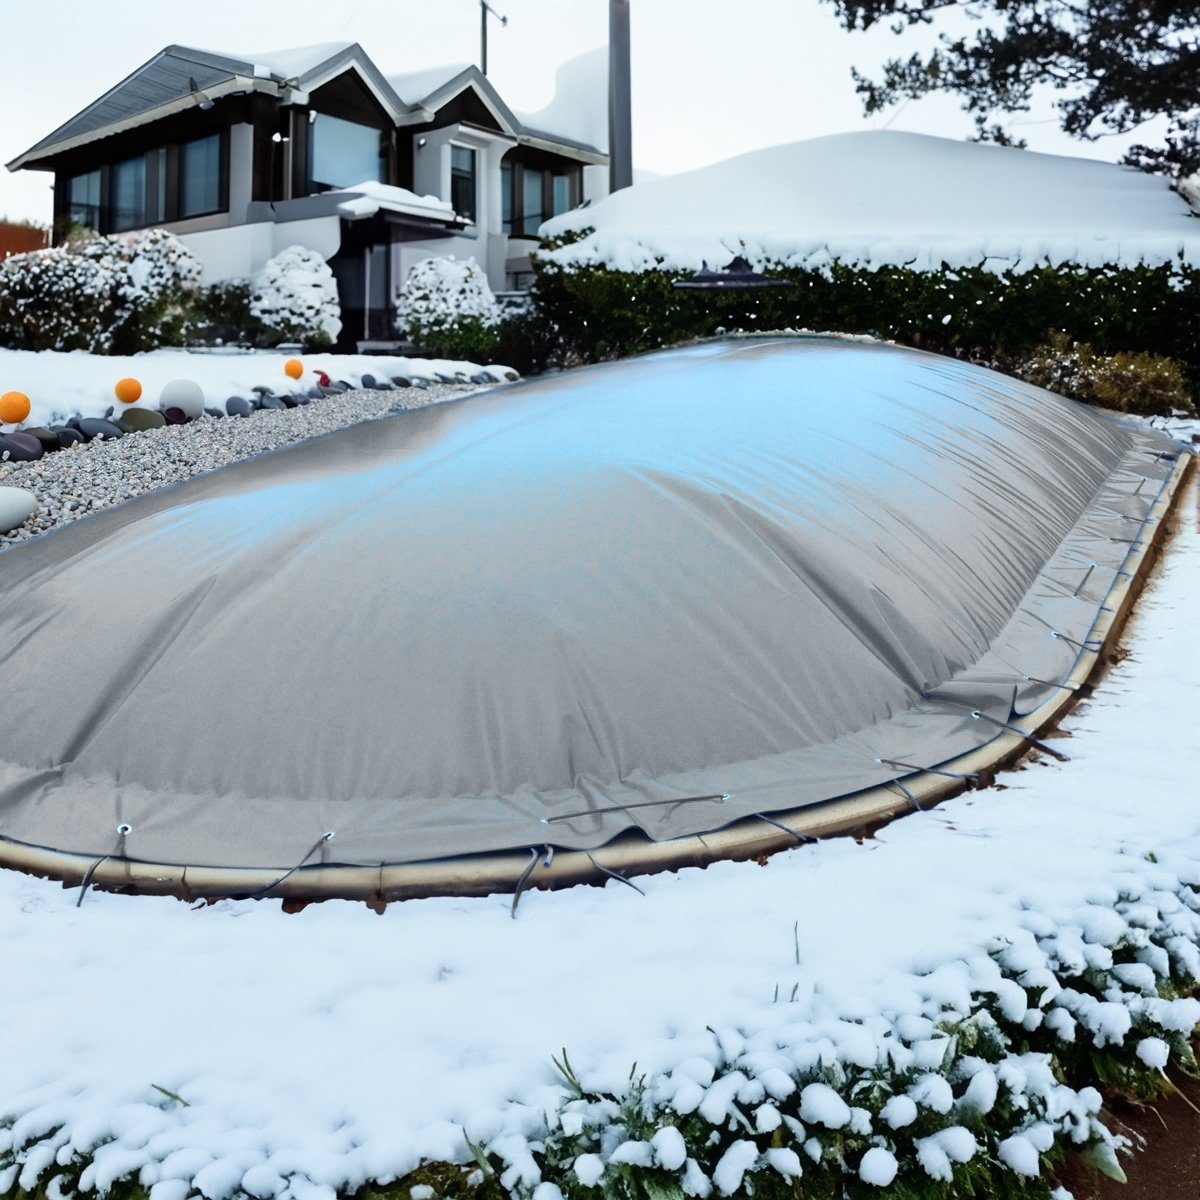  Whirlpool Outdoor Abdeckung, Round Pool Cover, Winterabdeckplane  Poolabdeckung, Ø D200xH85 cm, Grau